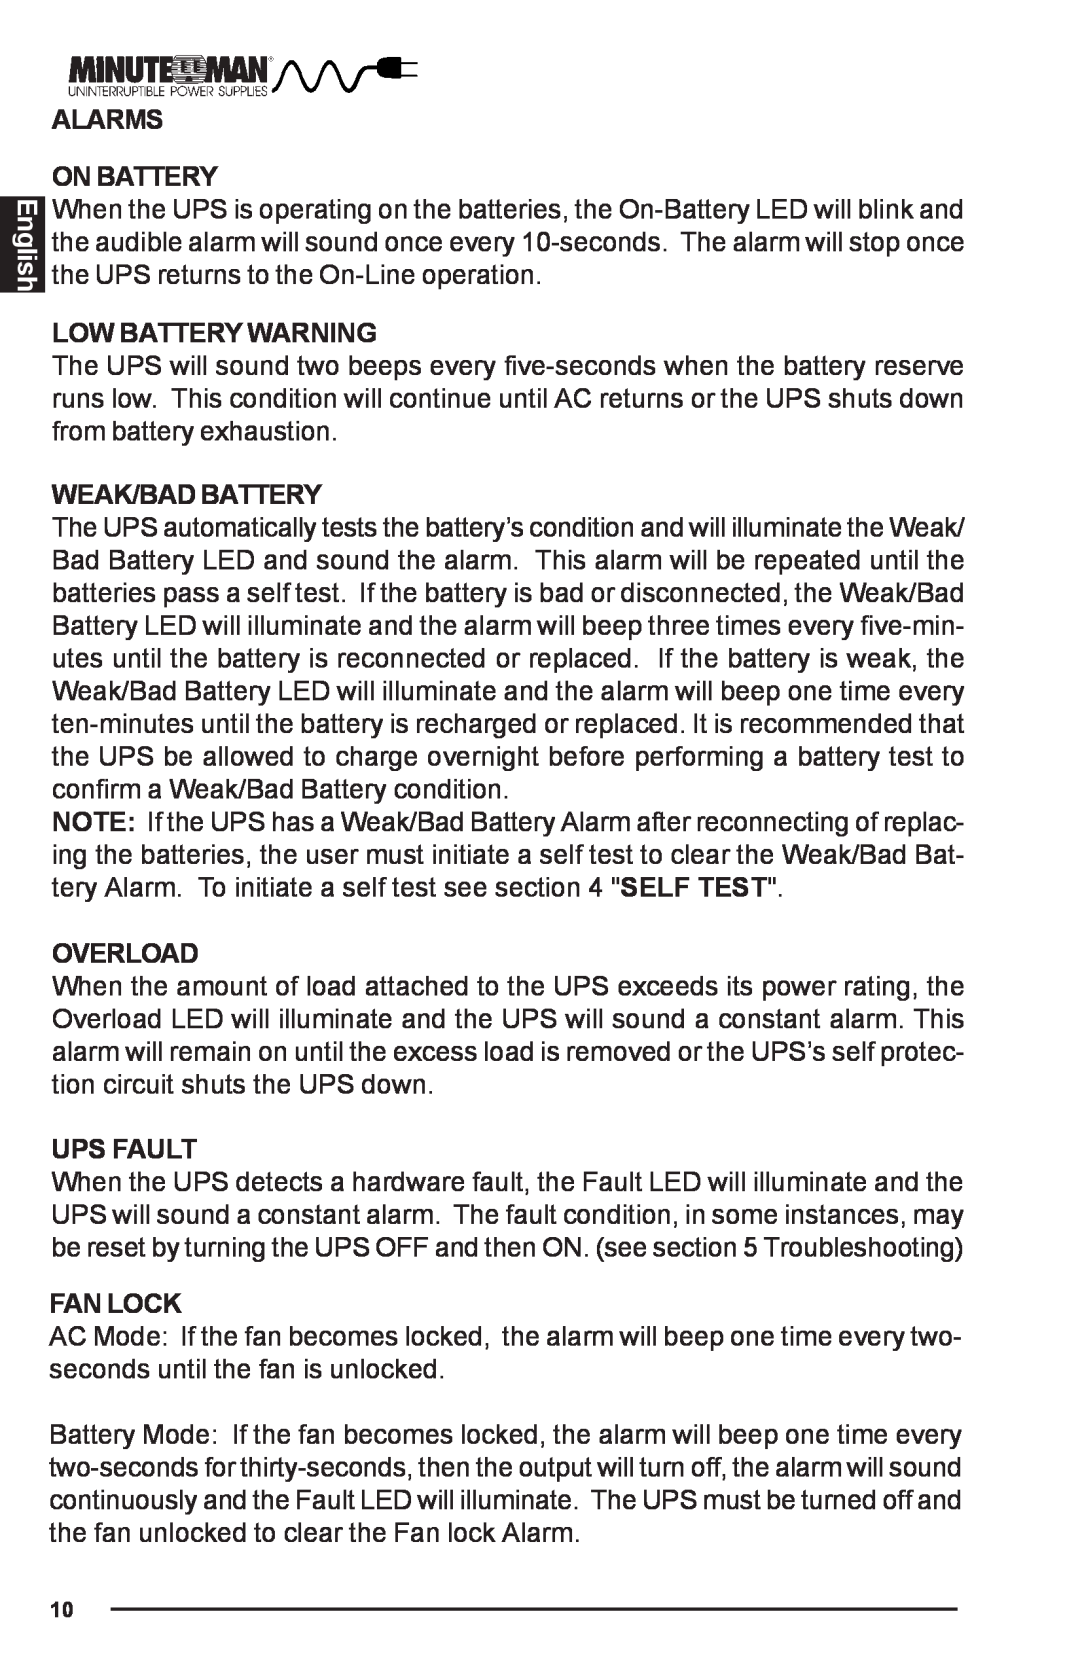 Minuteman UPS PRO-E English, Alarms On Battery, Low Battery Warning, Weak/Bad Battery, Overload, Ups Fault, Fan Lock 